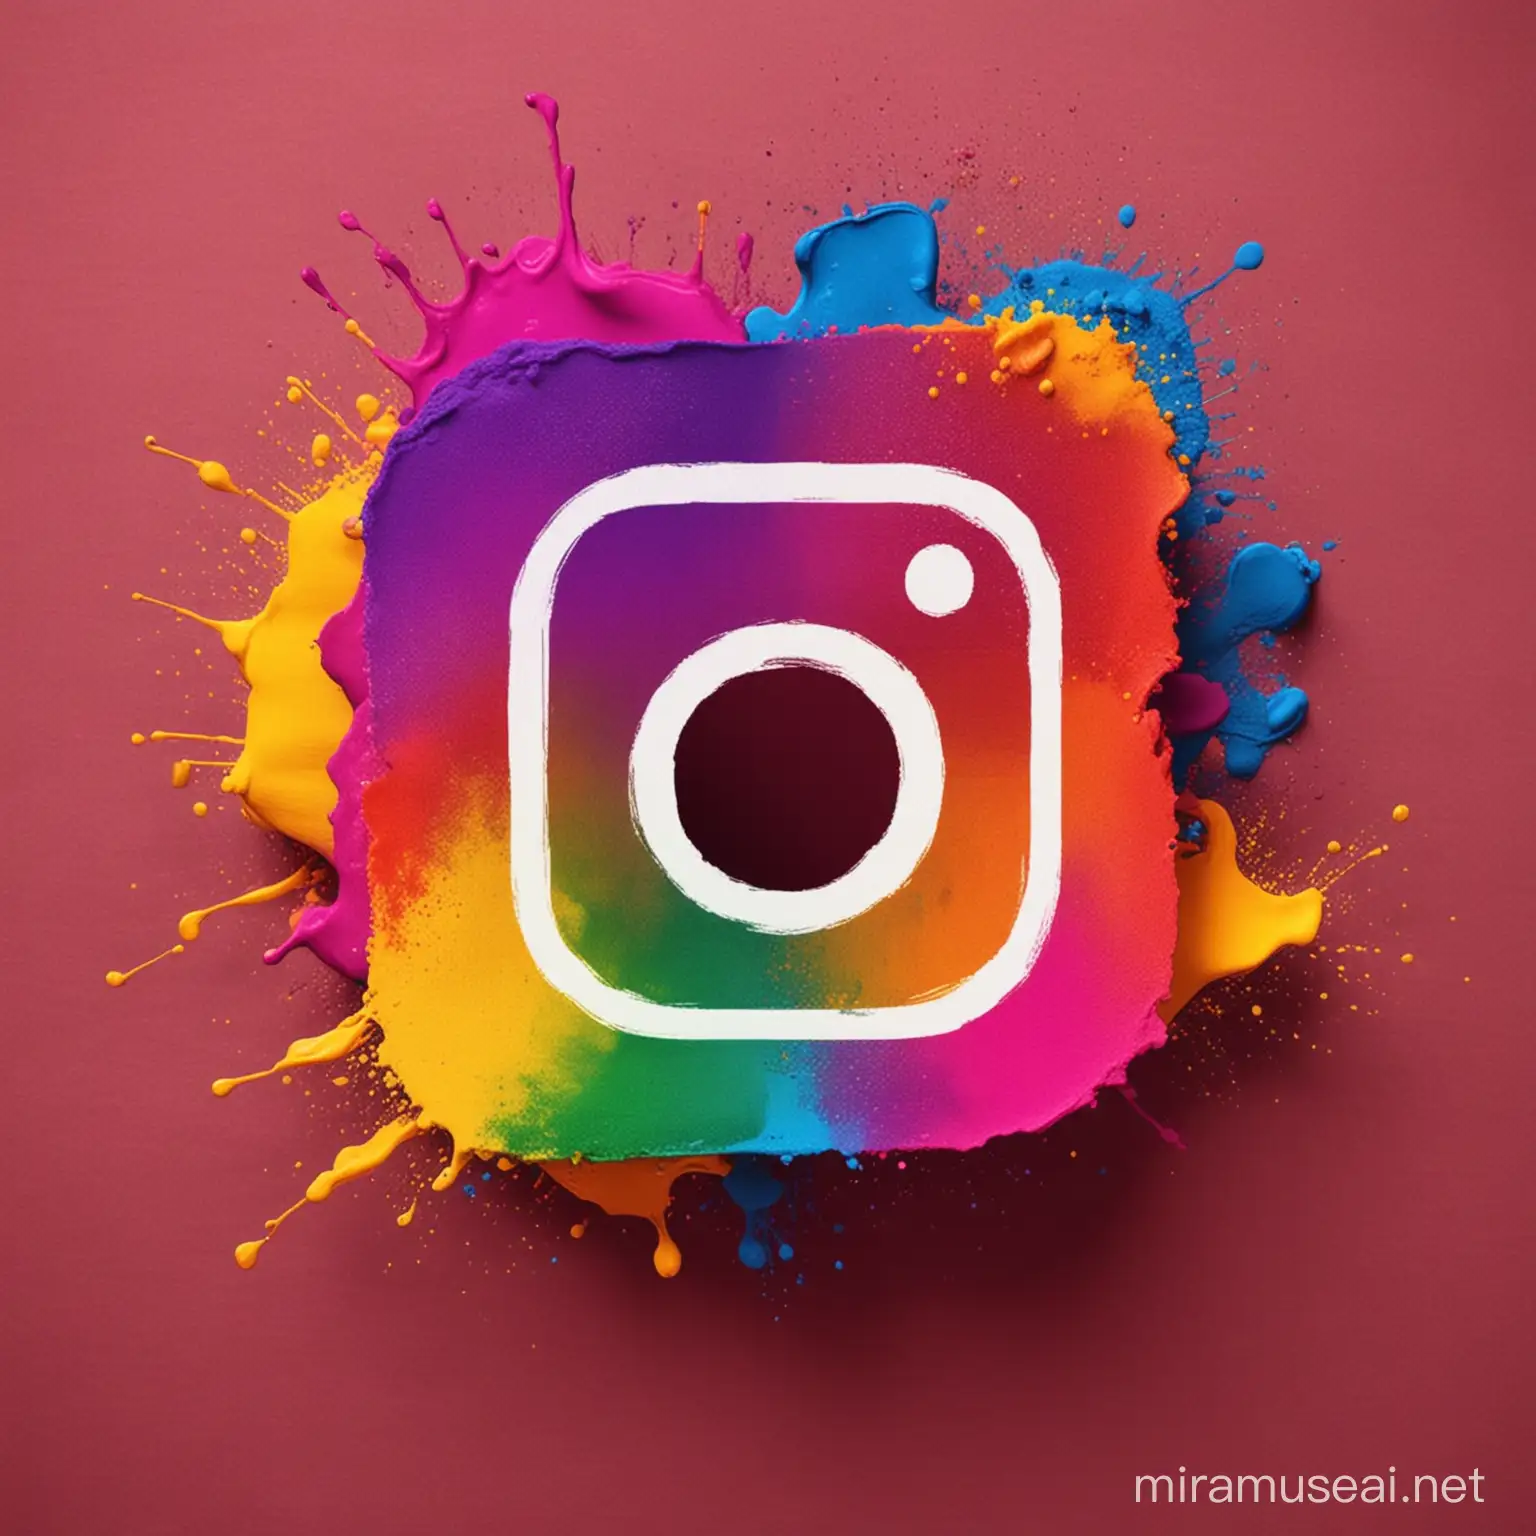 make a logo for a Instagram page name "NA" the logo should be based on holi theme